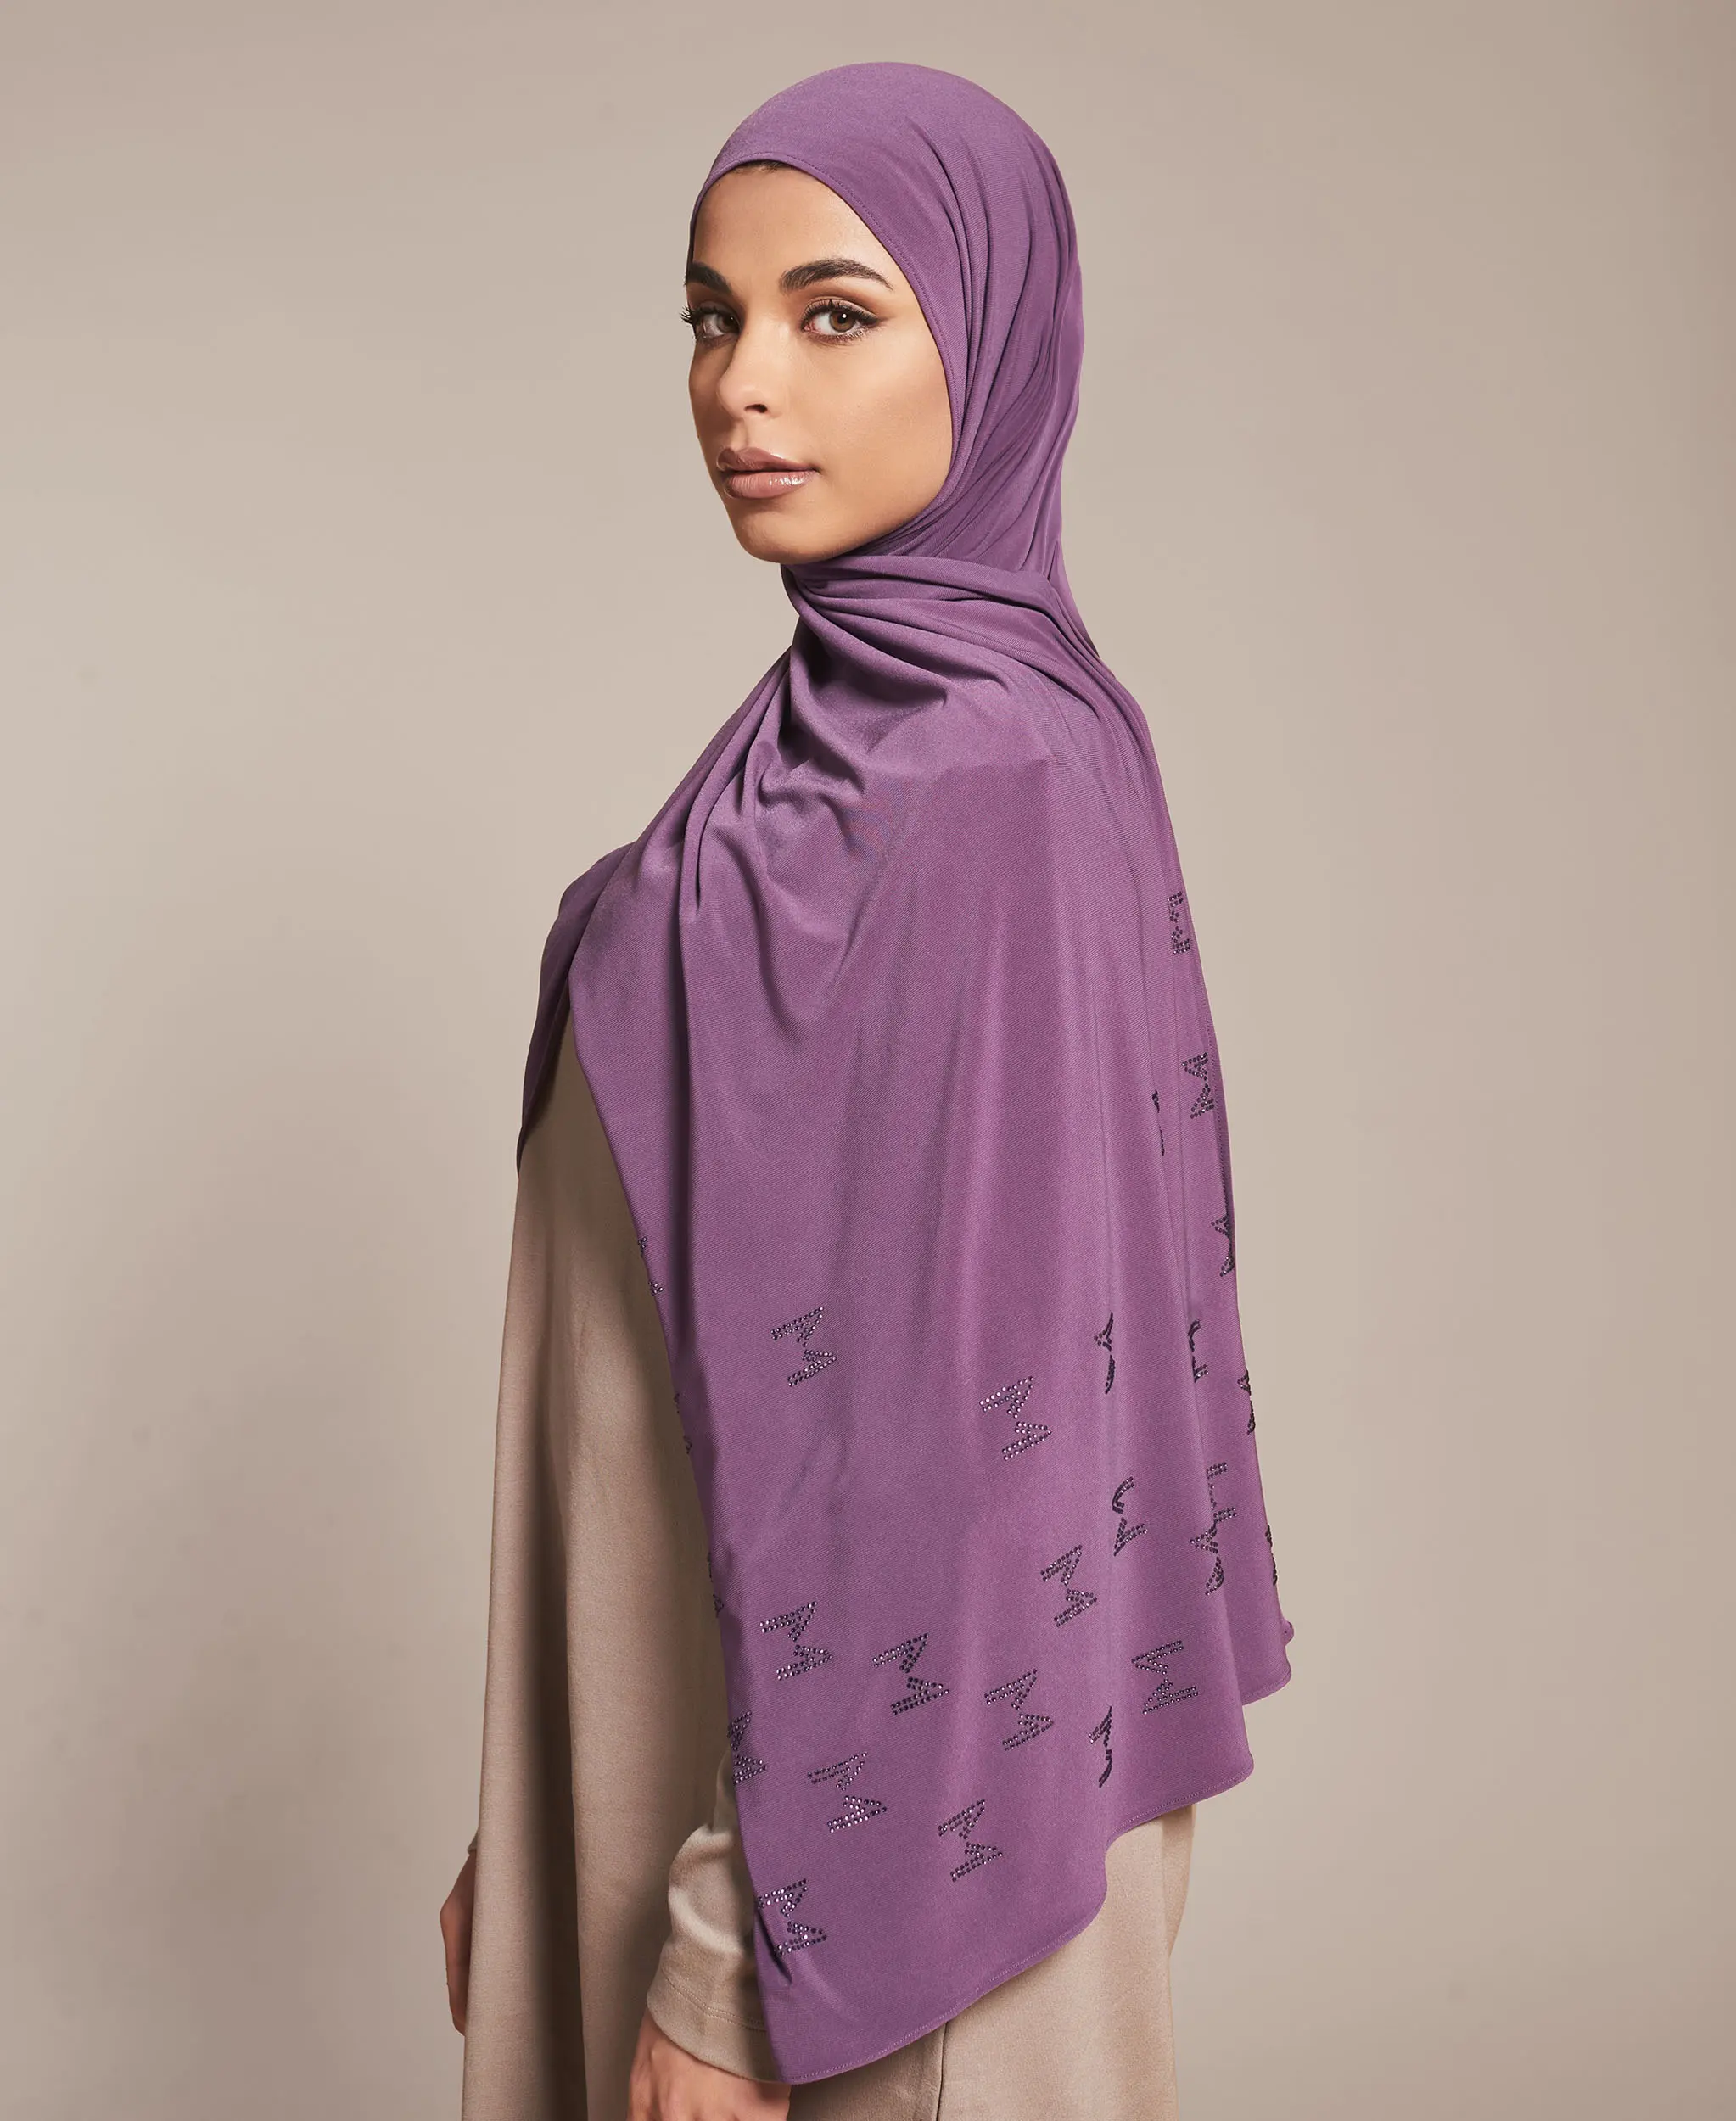 OEM ODM 스톤 저지 스카프 스트레치 5% 라이크라 + 95% 저지 hijab 네덜란드 클래식 스카프 저지 코튼 스톤 스카프 및 shawls